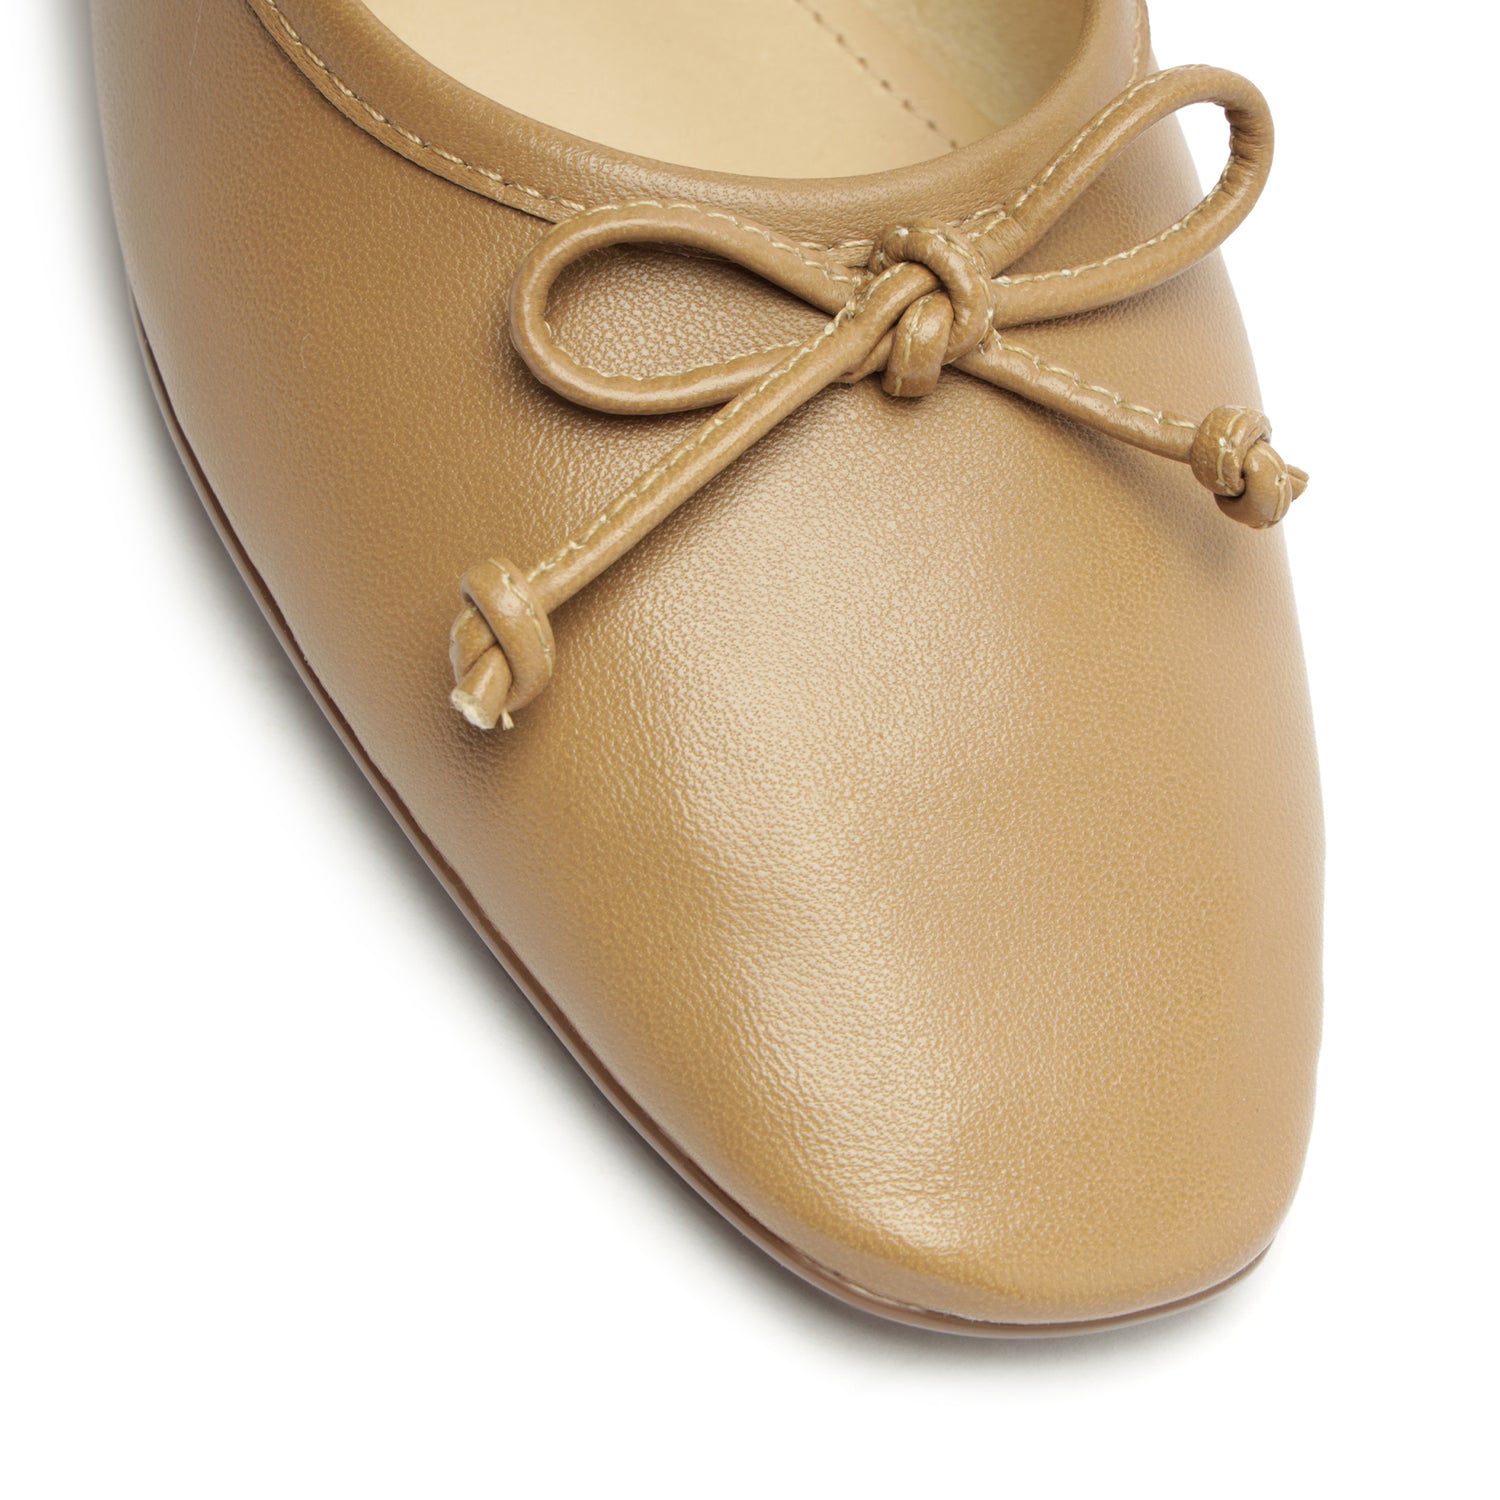 Arissa Rebecca Allen Leather Flat Flats Spring 23    - Schutz Shoes